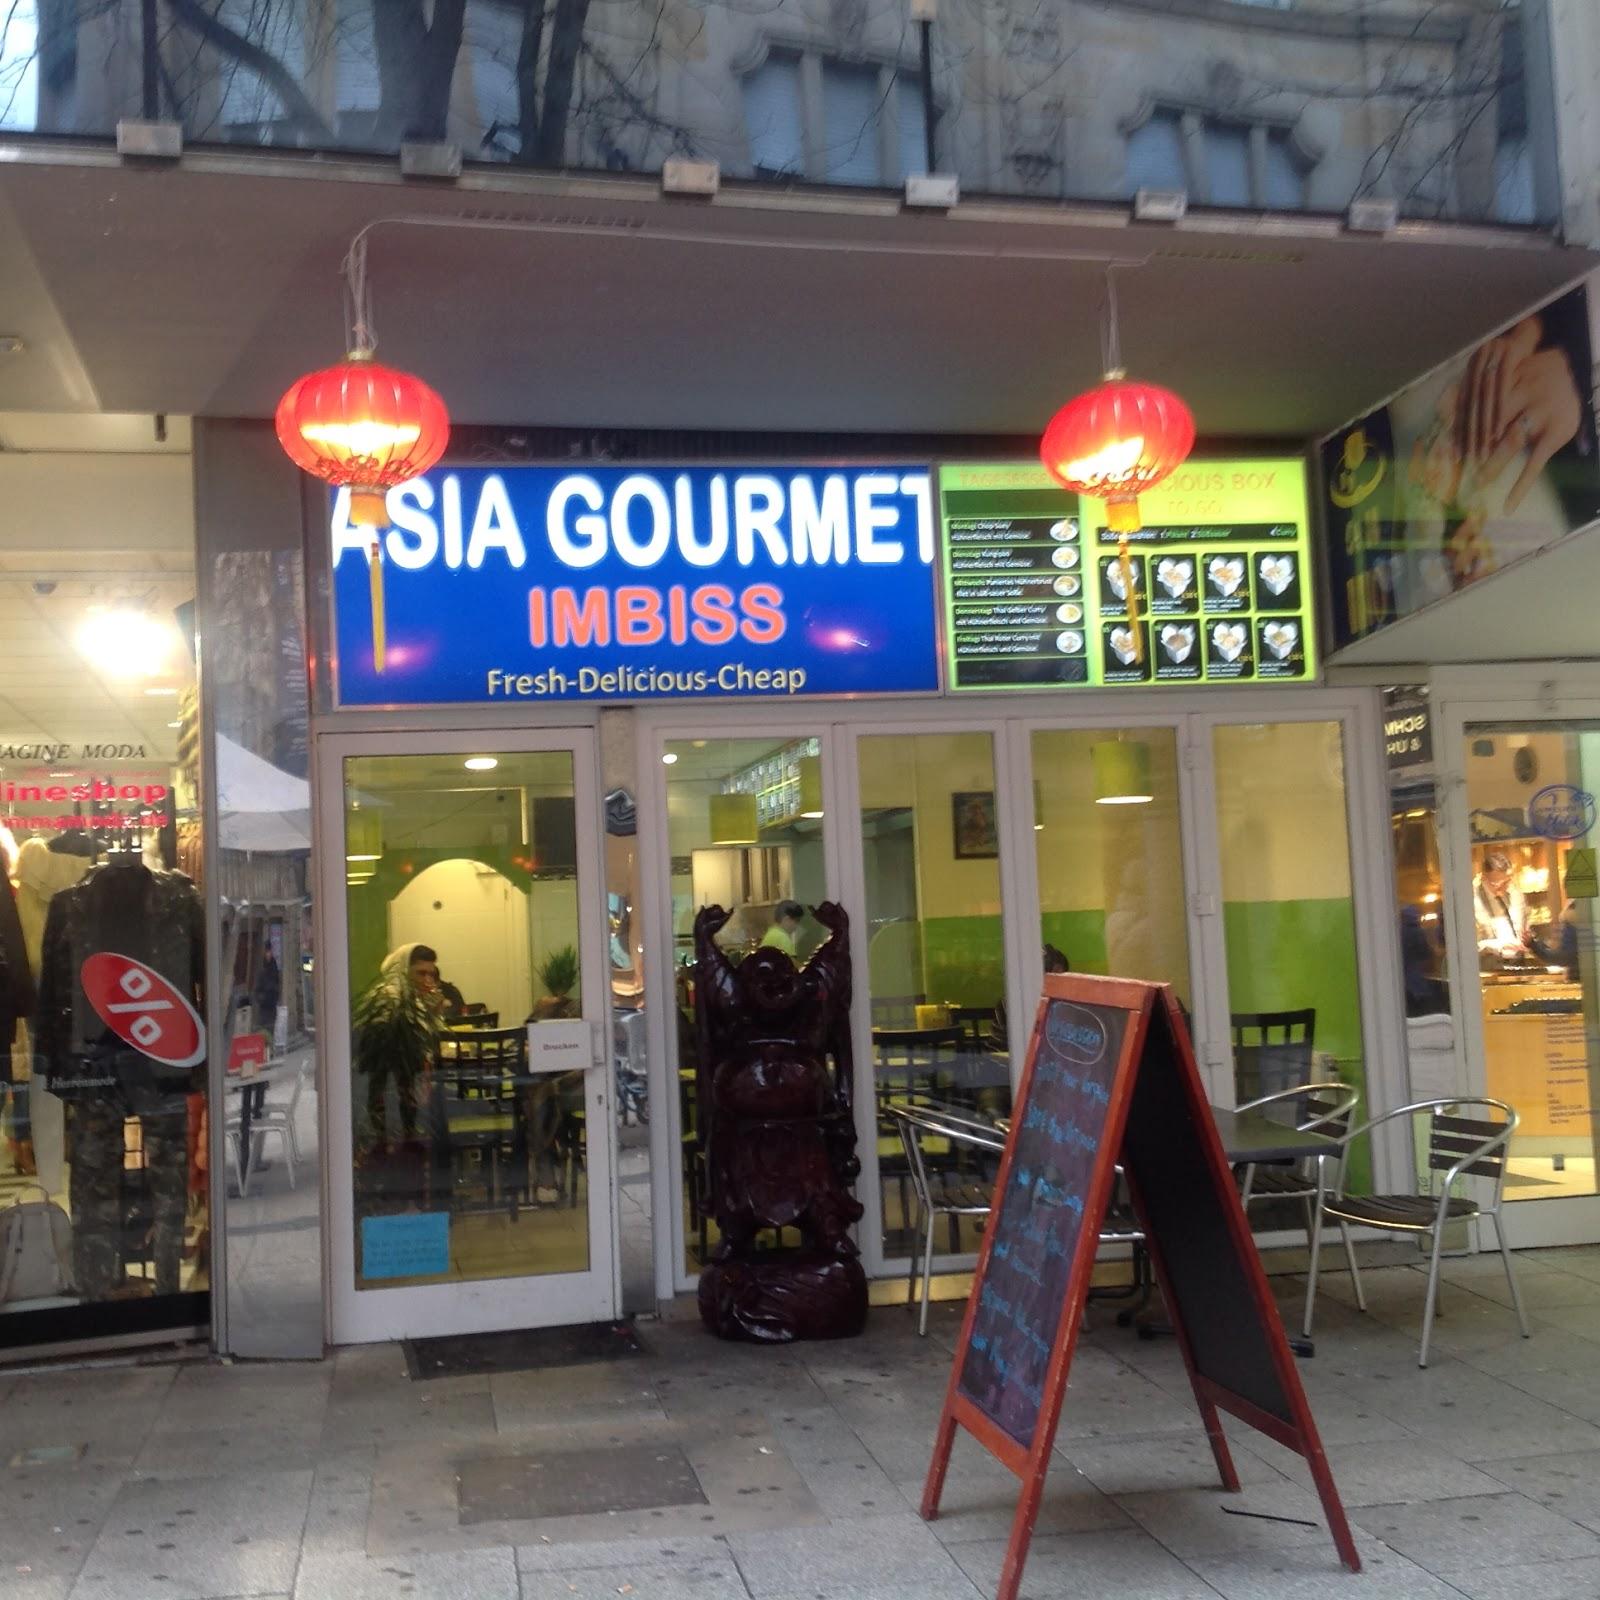 Restaurant "Asia Gourmet Imbiss" in Stuttgart